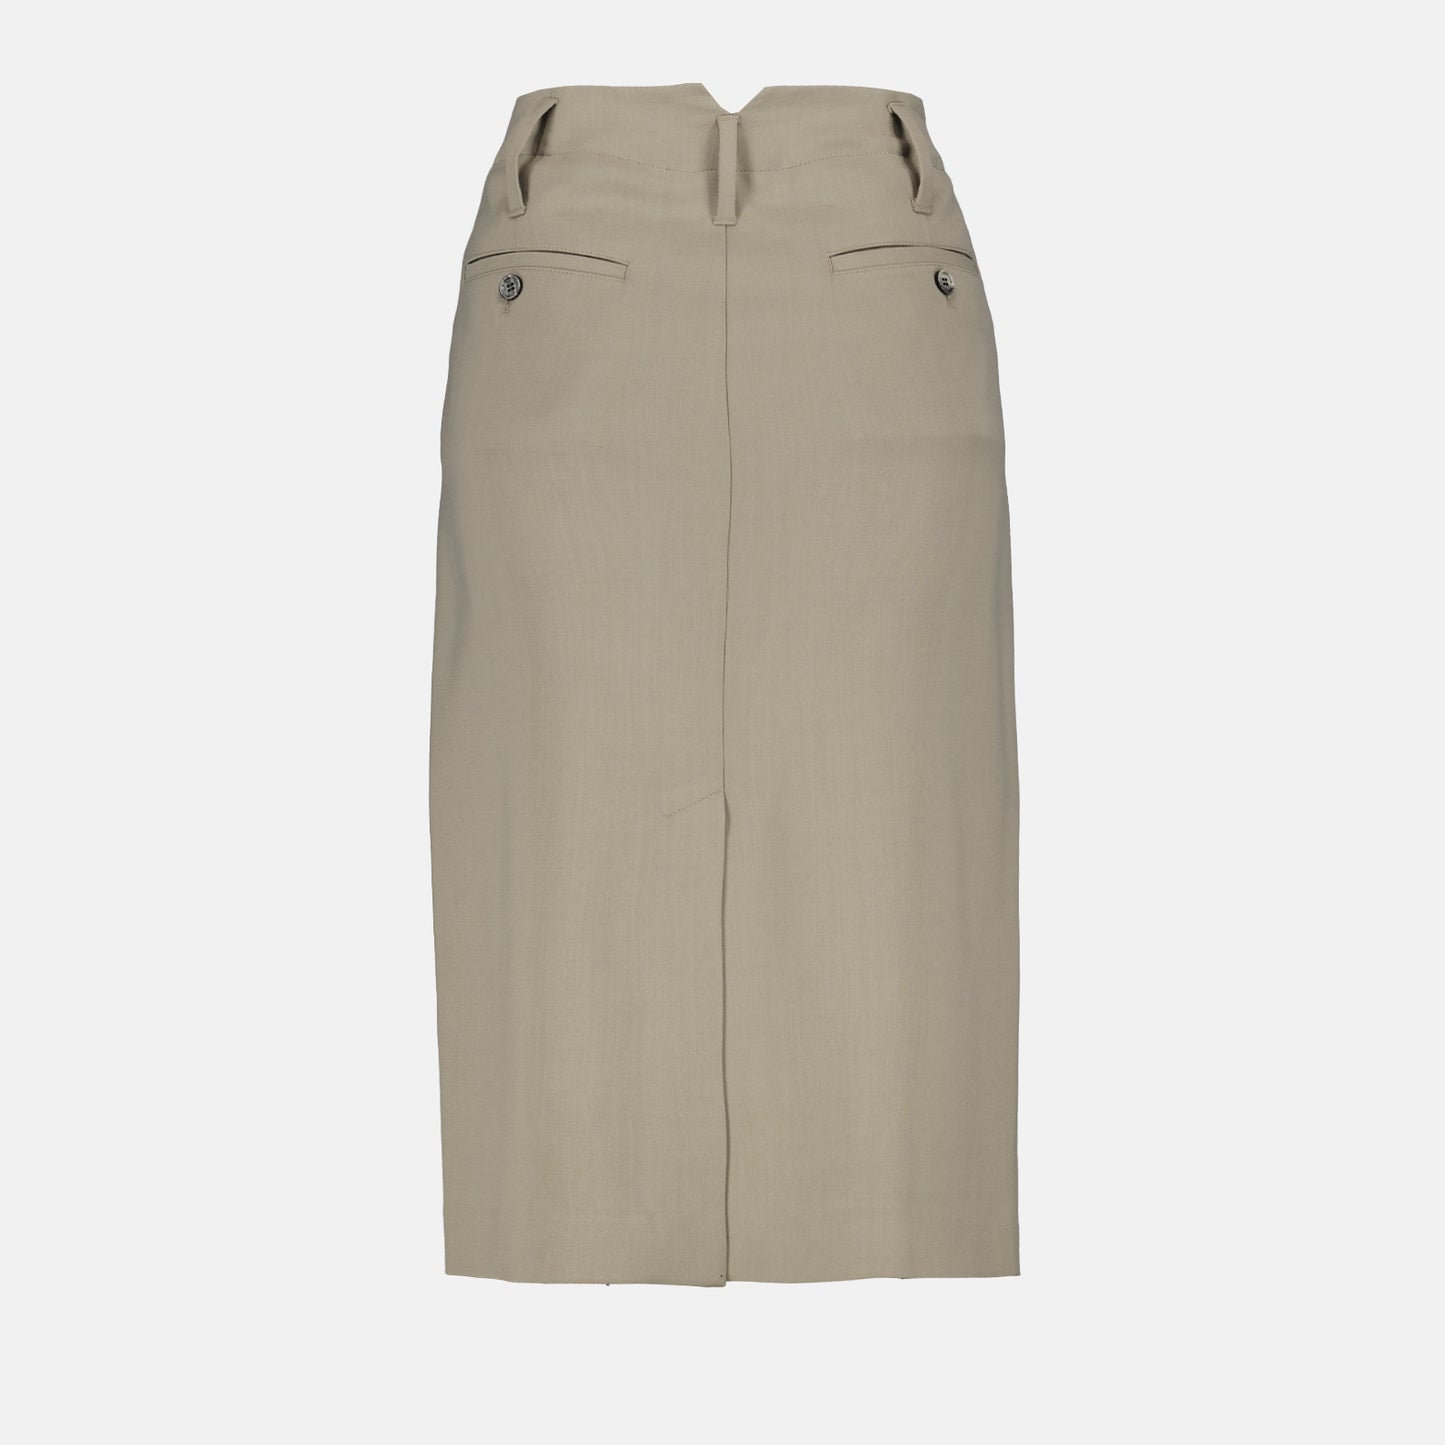 Pencil skirt